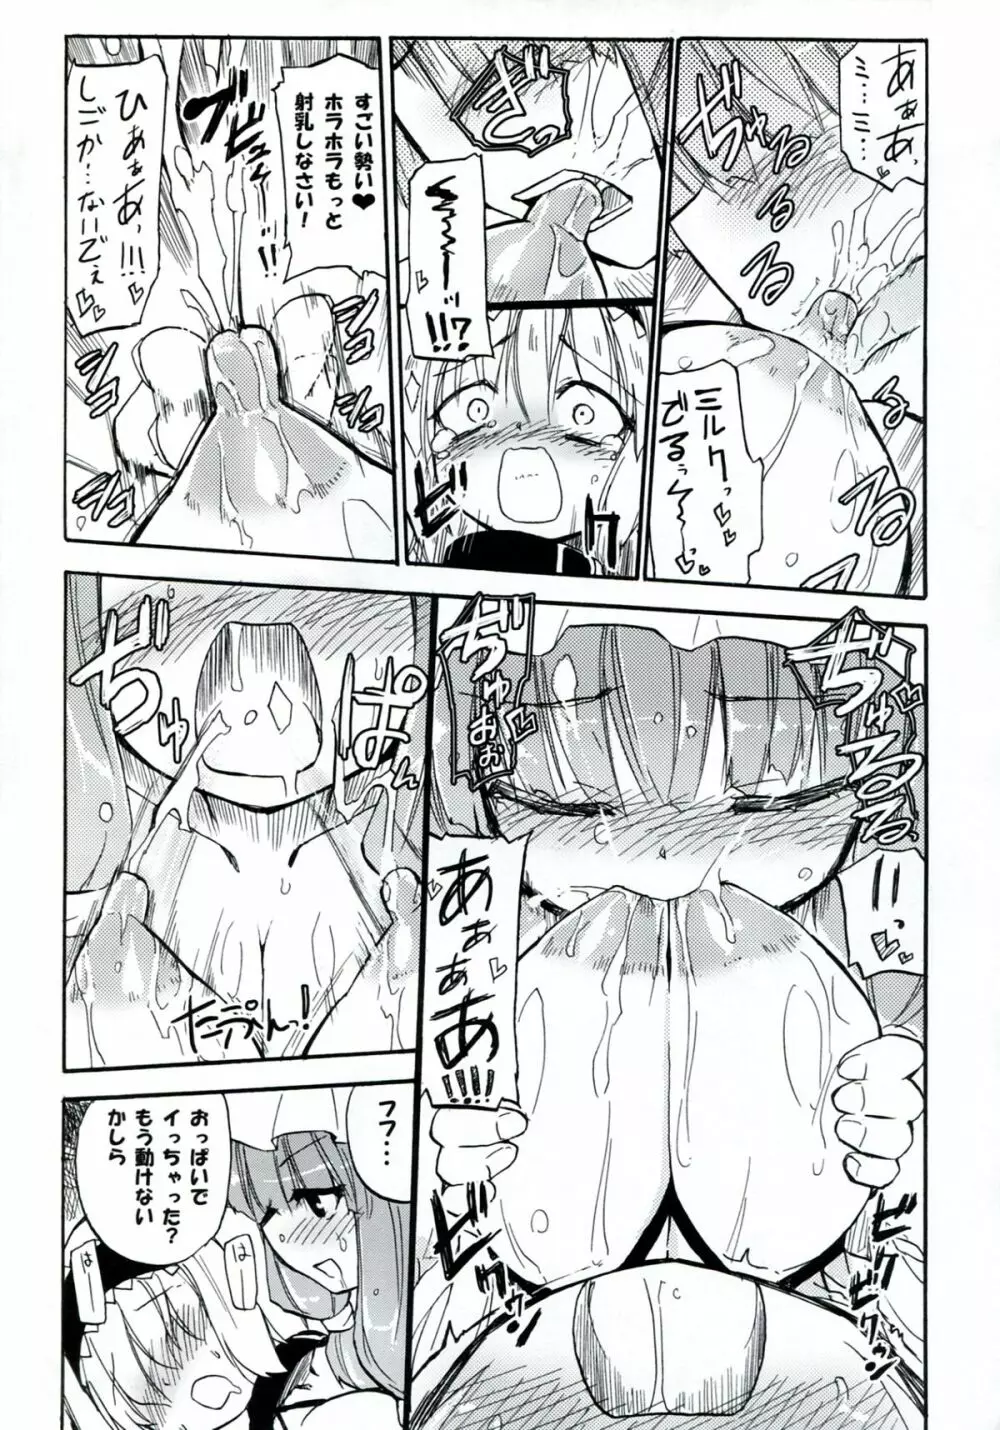 Homuraya Milk ★ Collection 2 - page21